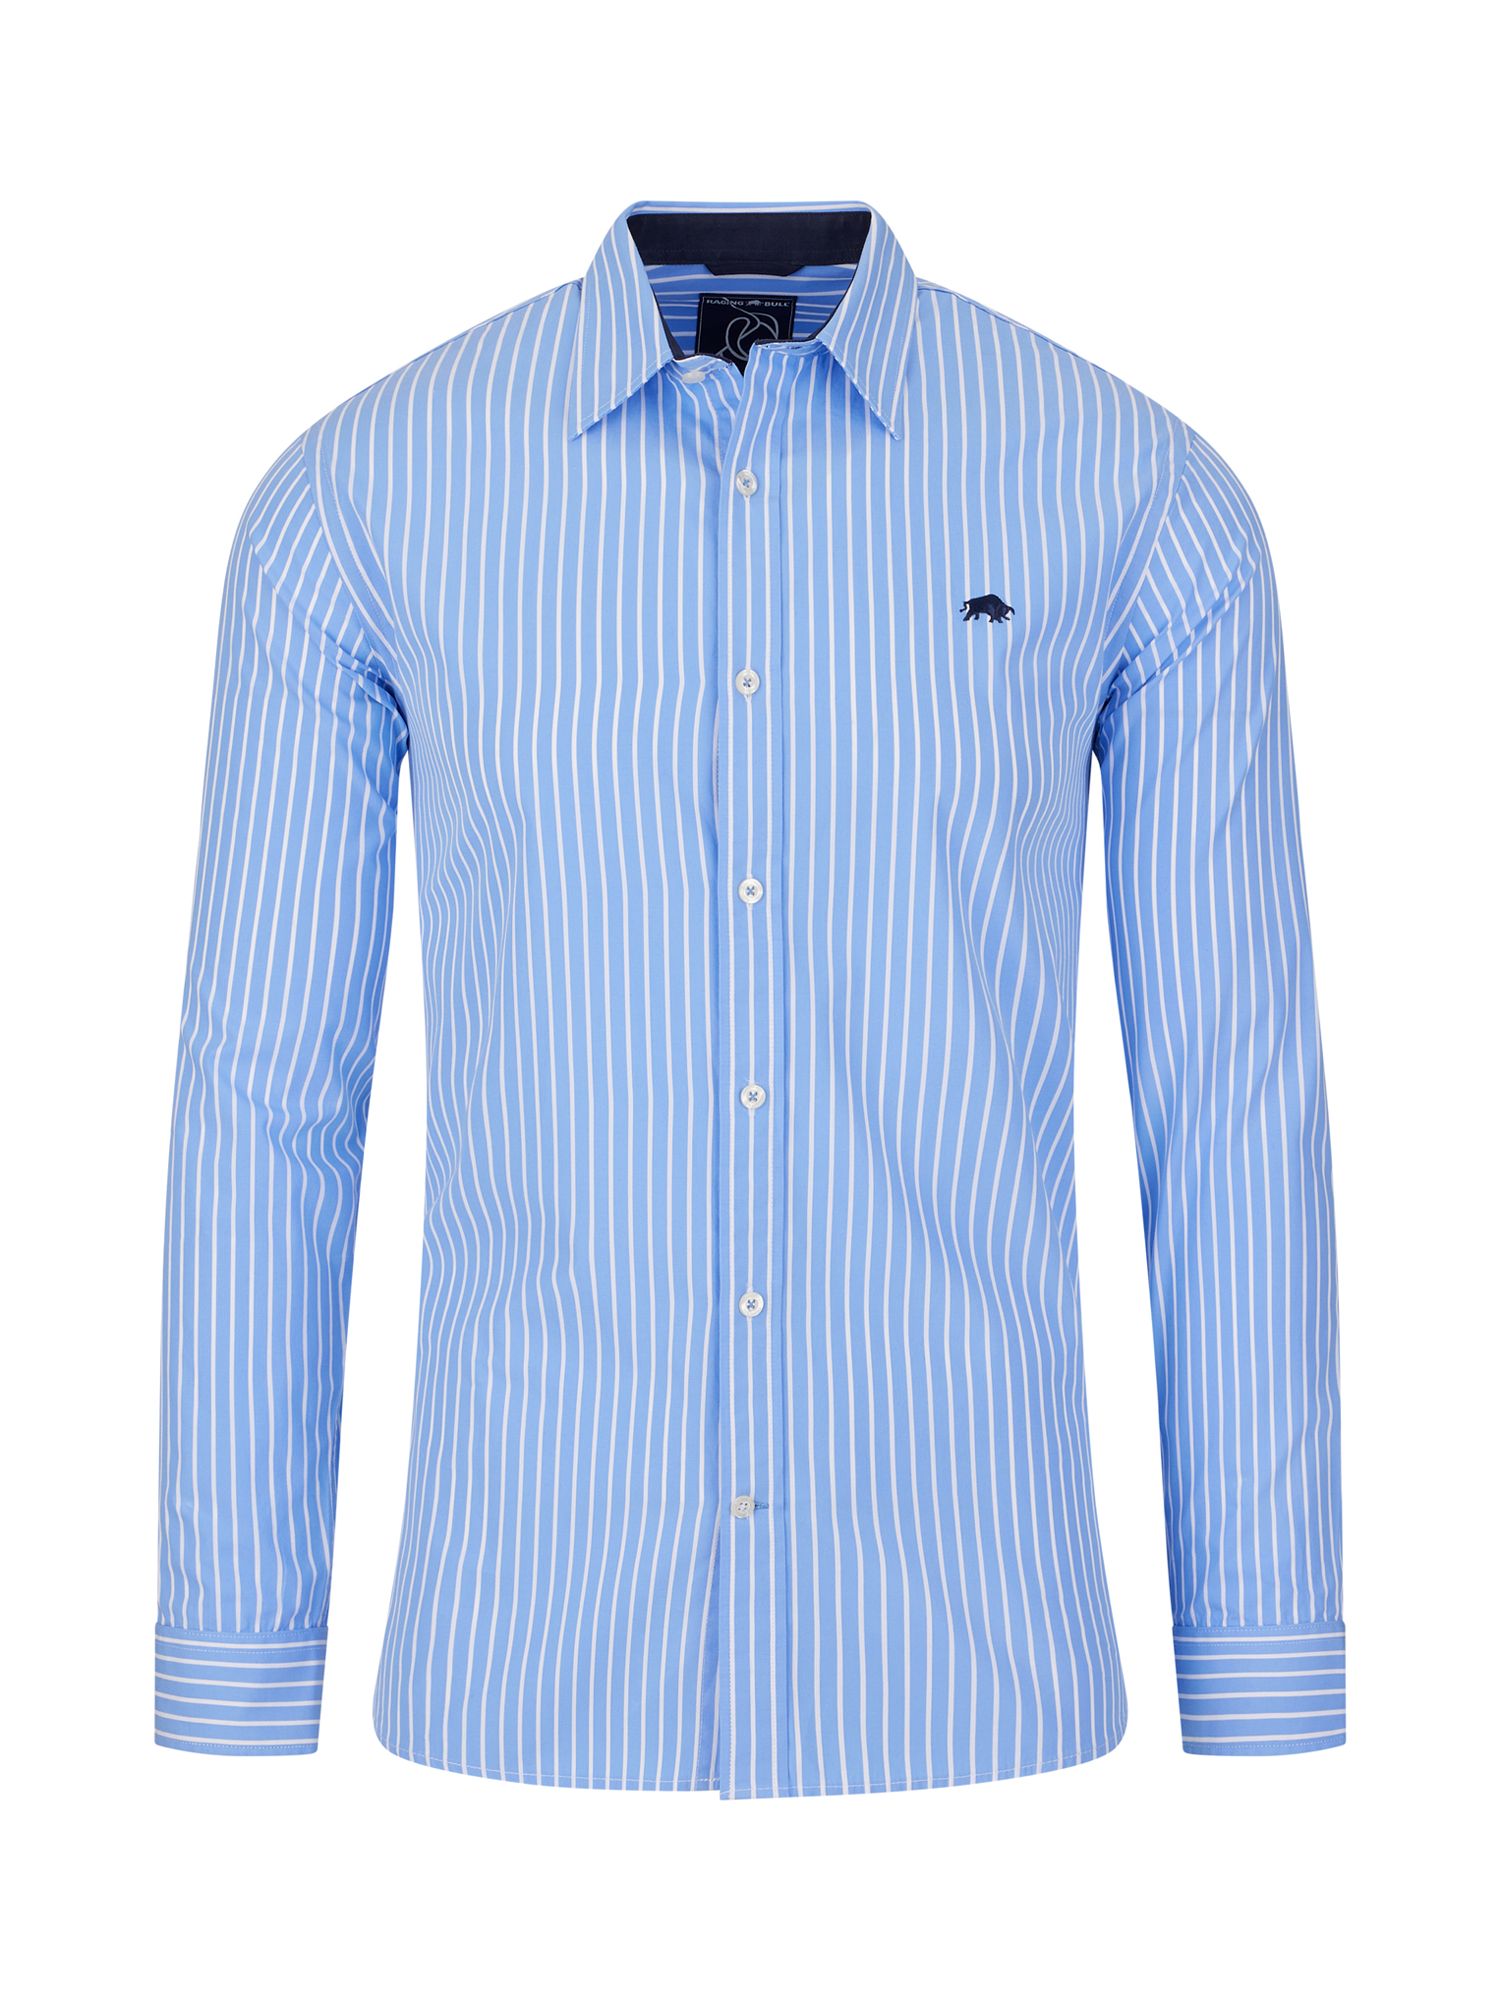 Raging Bull Classic Long Sleeve Stripe Shirt, Blue/White, L